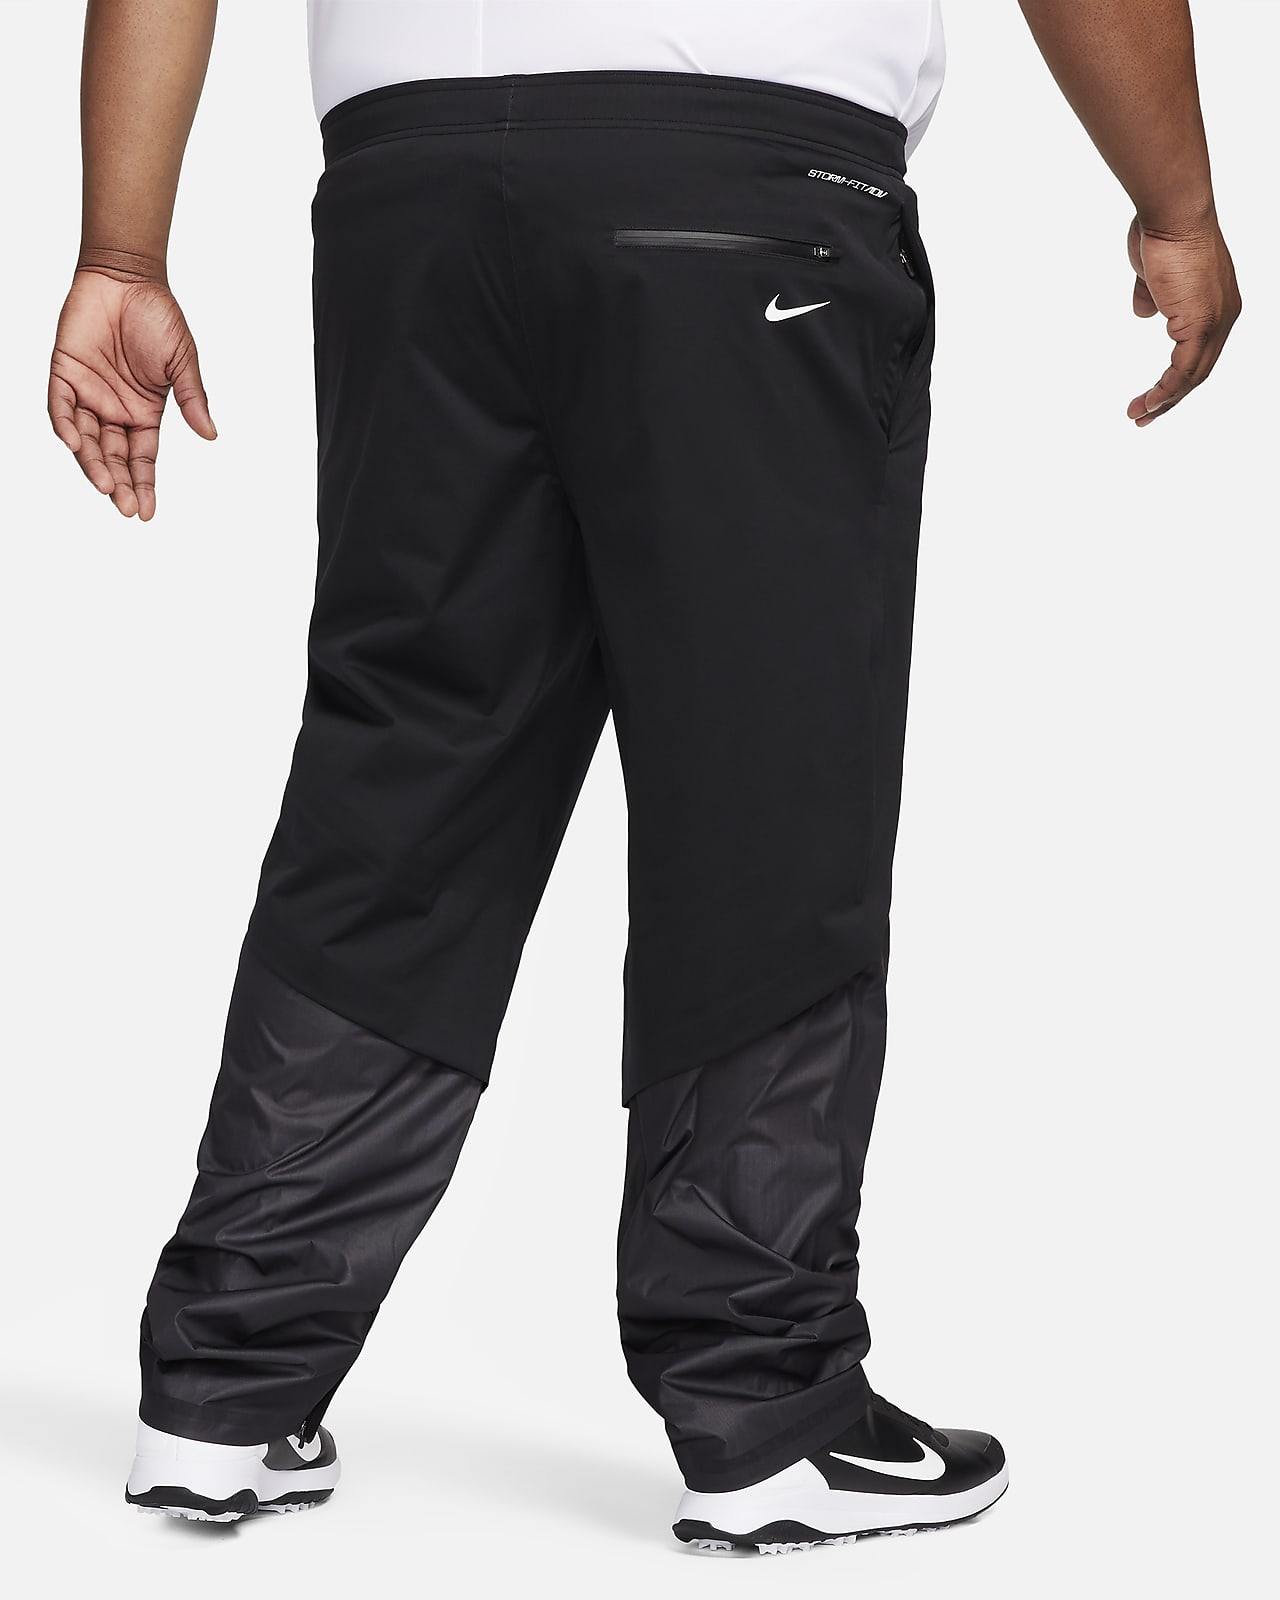 Nike Storm FIT ADV Men's Golf Pants